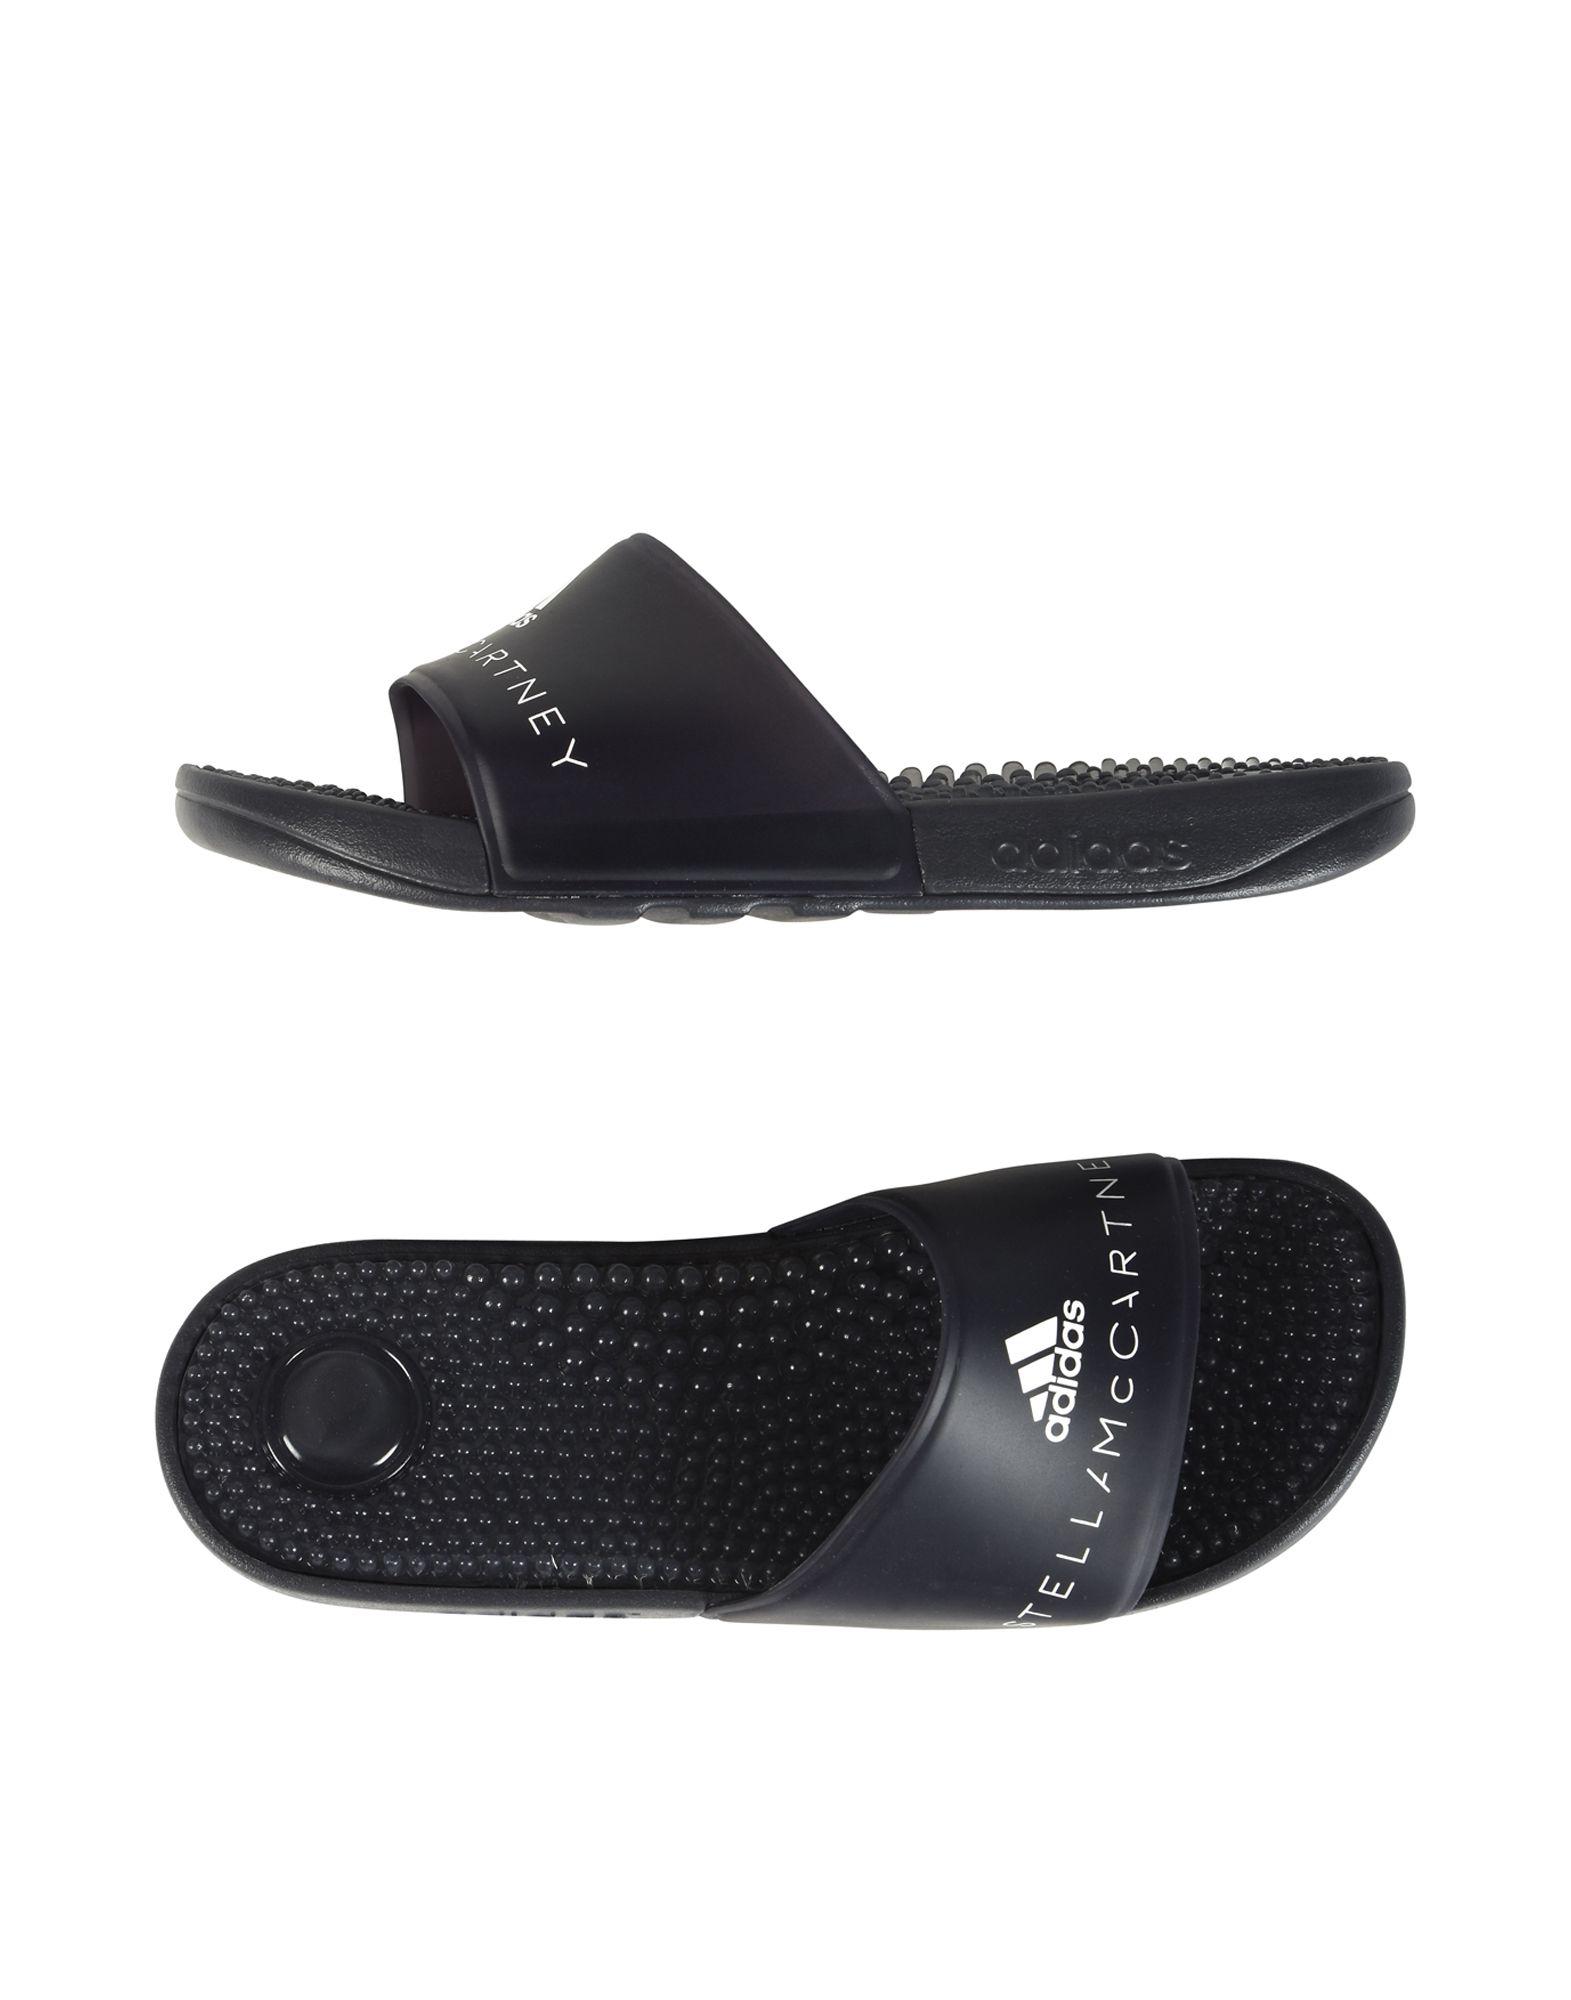 adidas By Stella McCartney Rubber Sandals in Black - Lyst